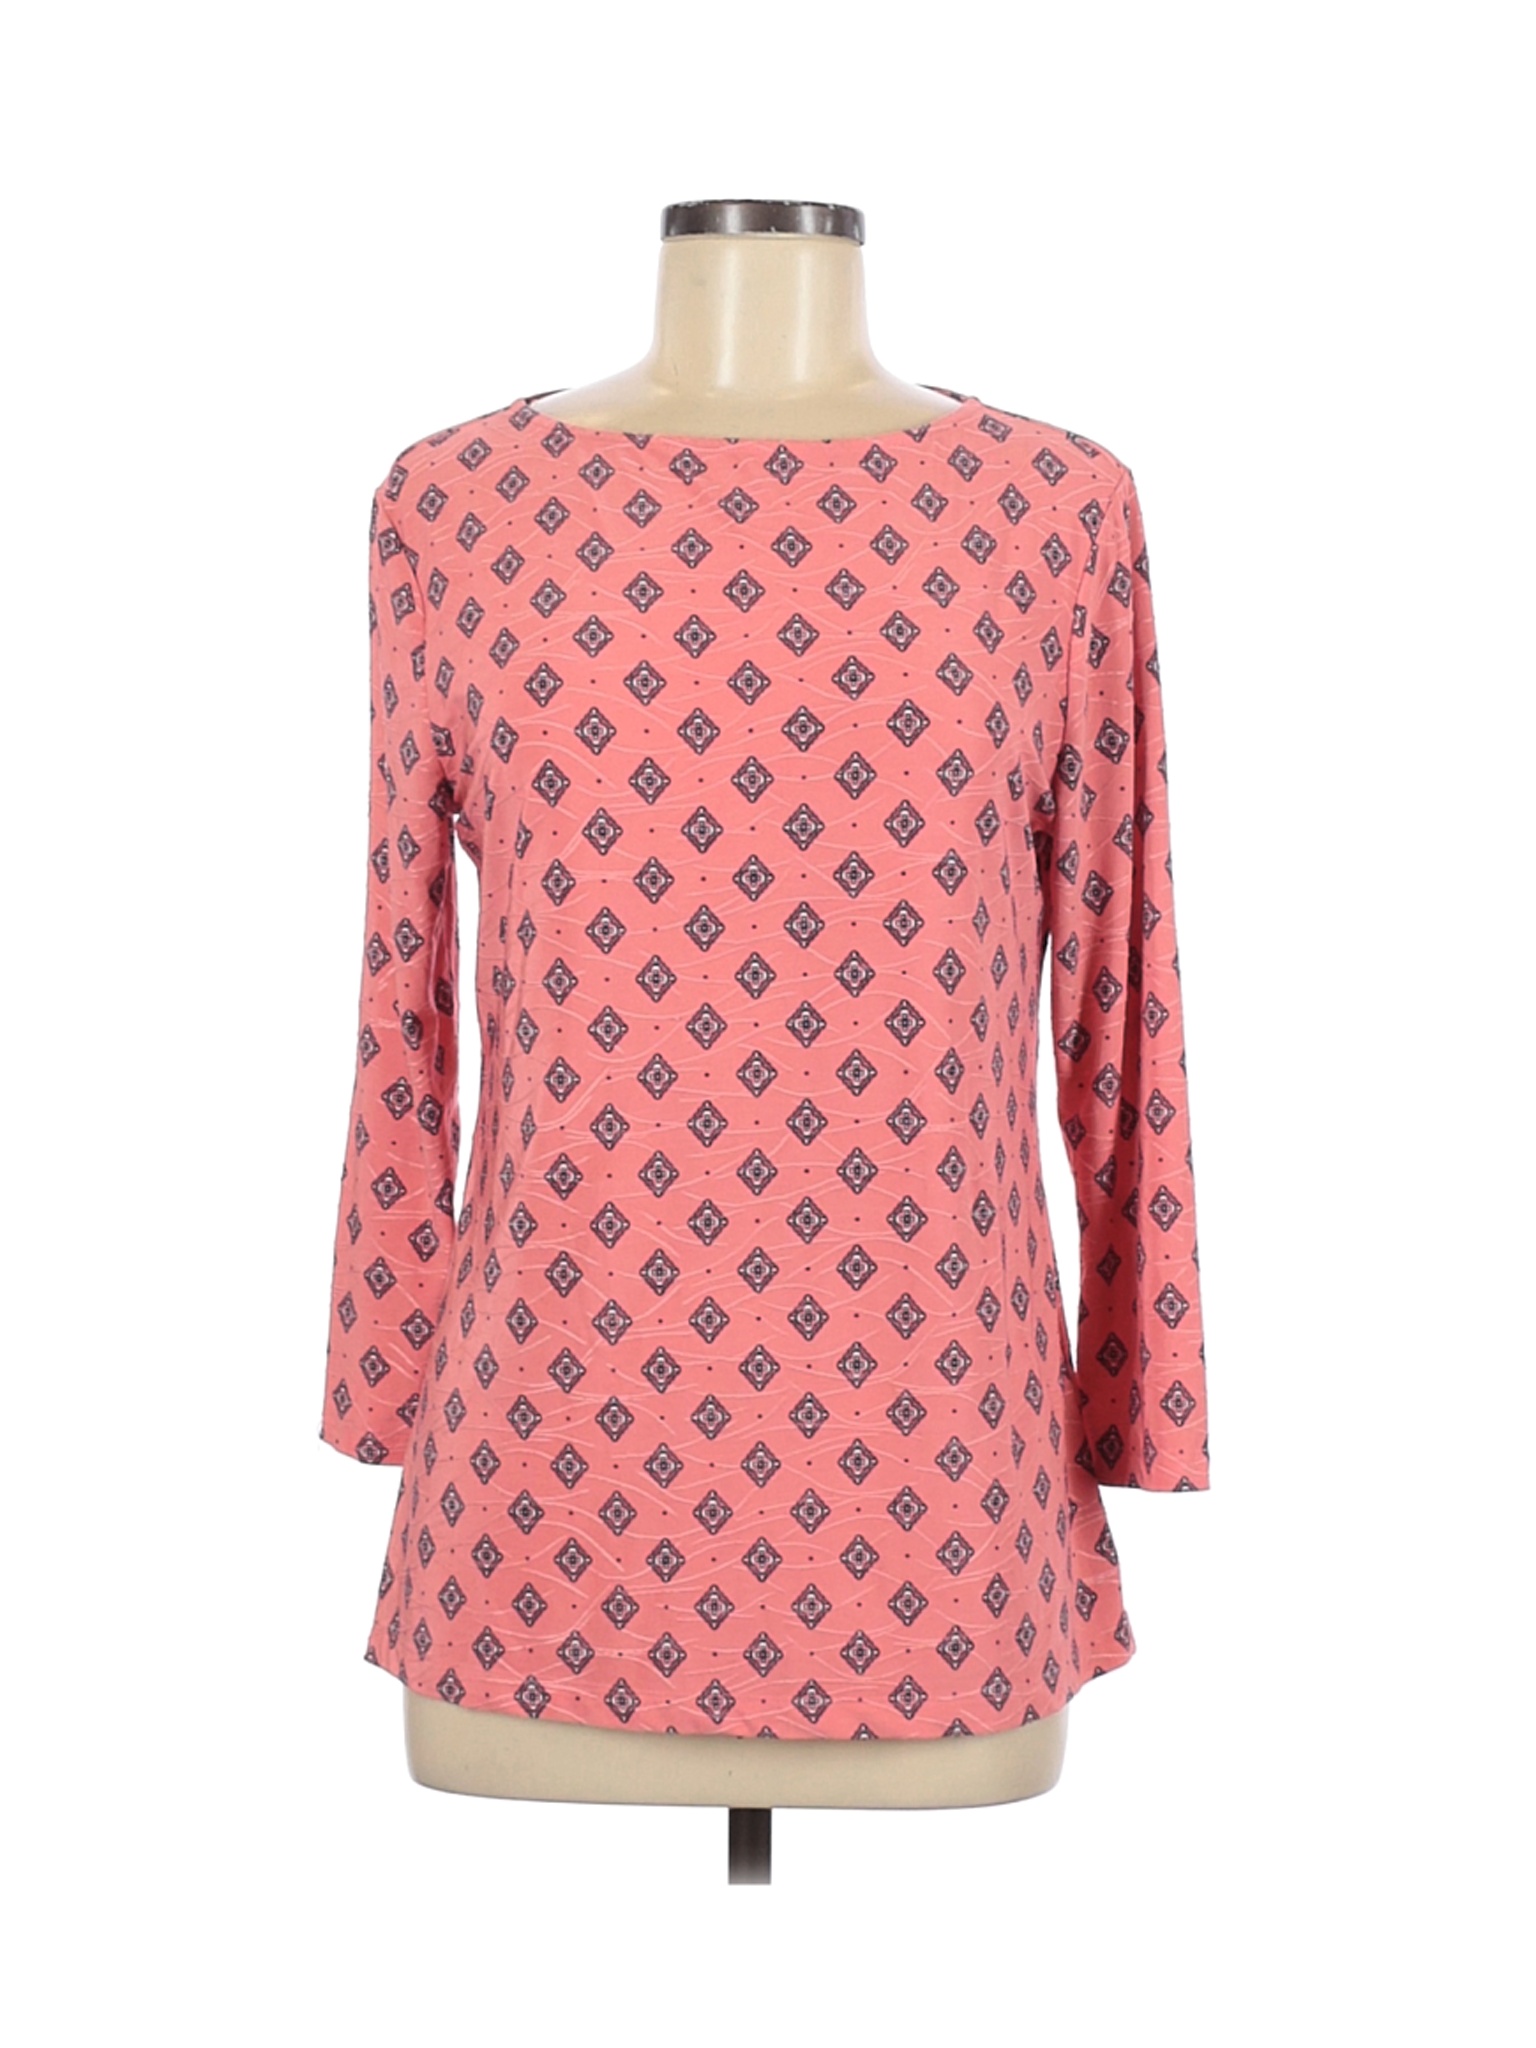 Croft & Barrow Women Pink 3/4 Sleeve Top S | eBay